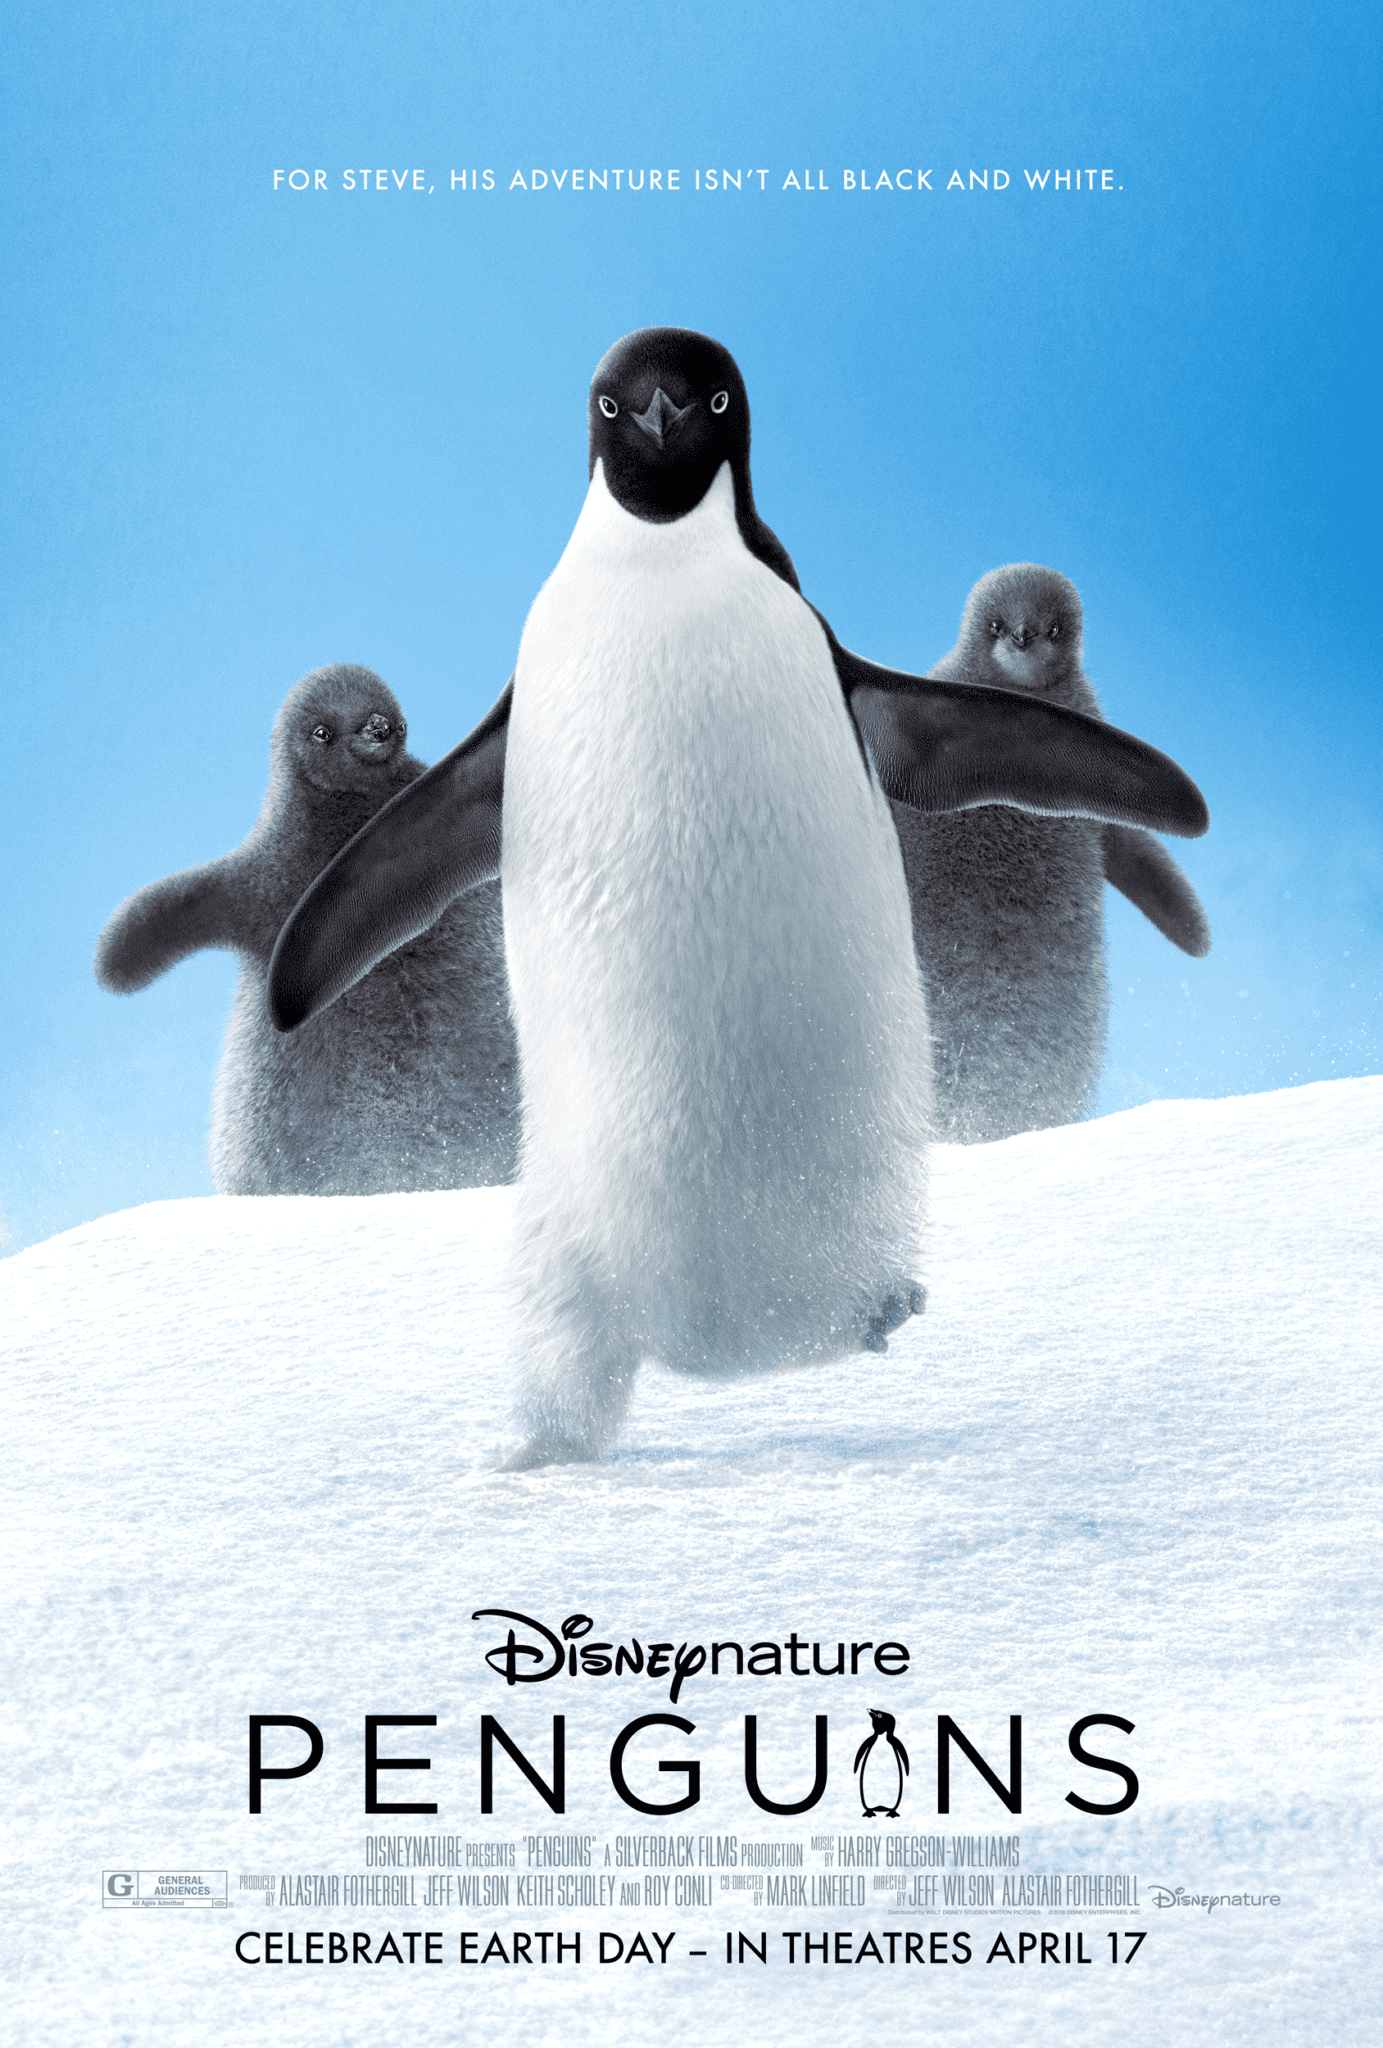 DisneyNature Penguin celebrates Earth Day 2019